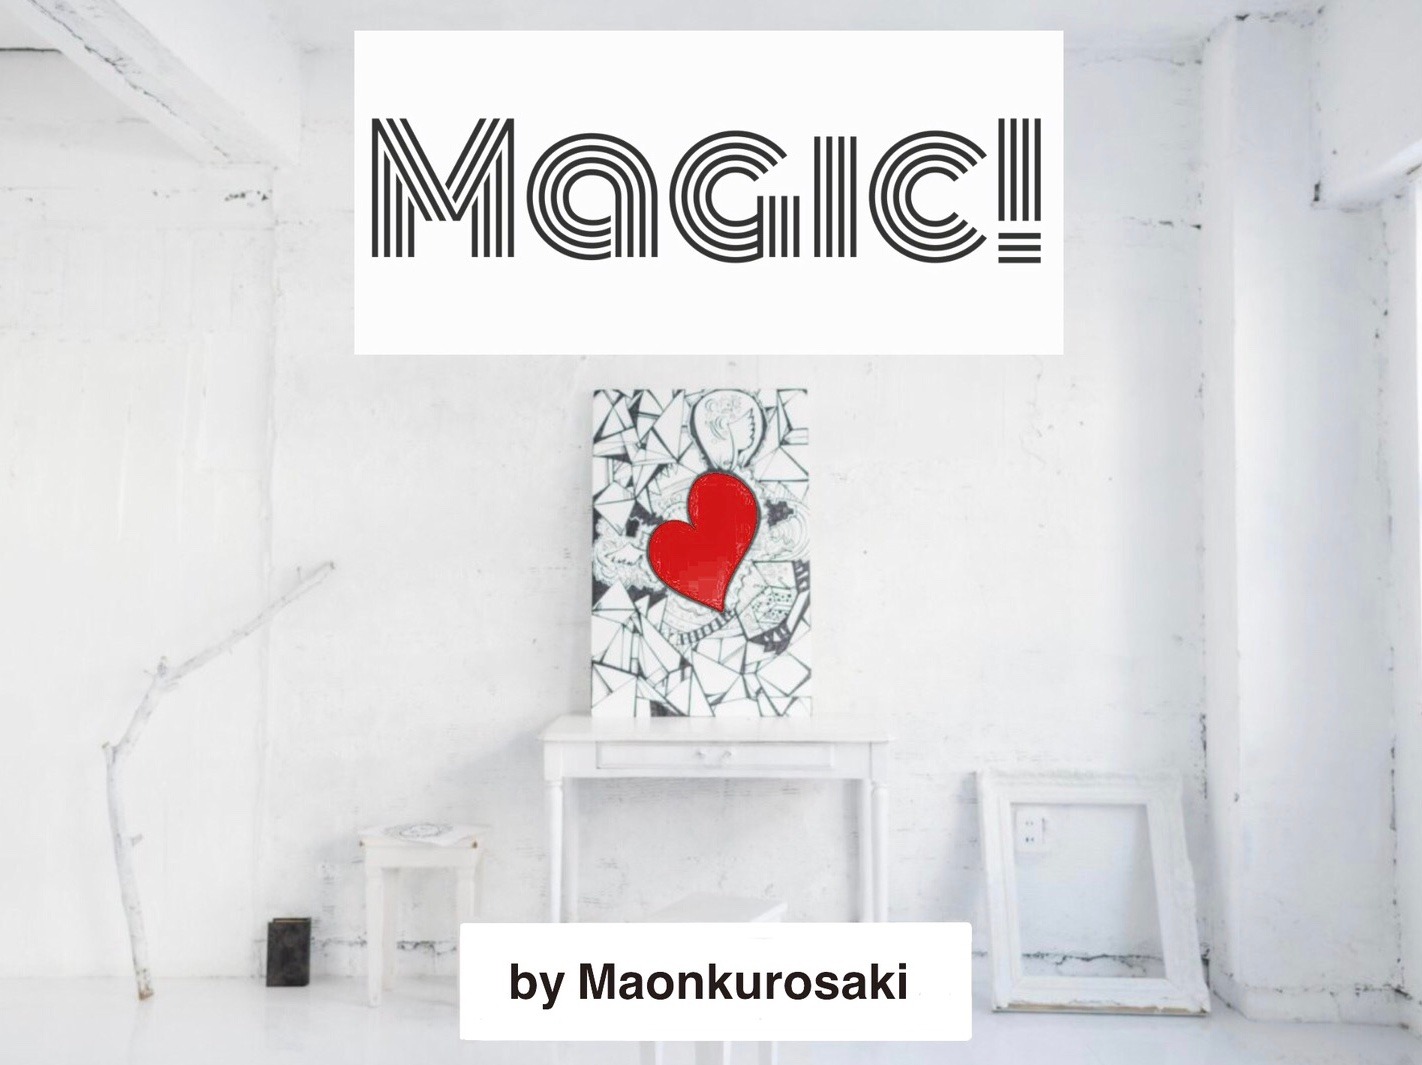  Magic! by maonkurosaki